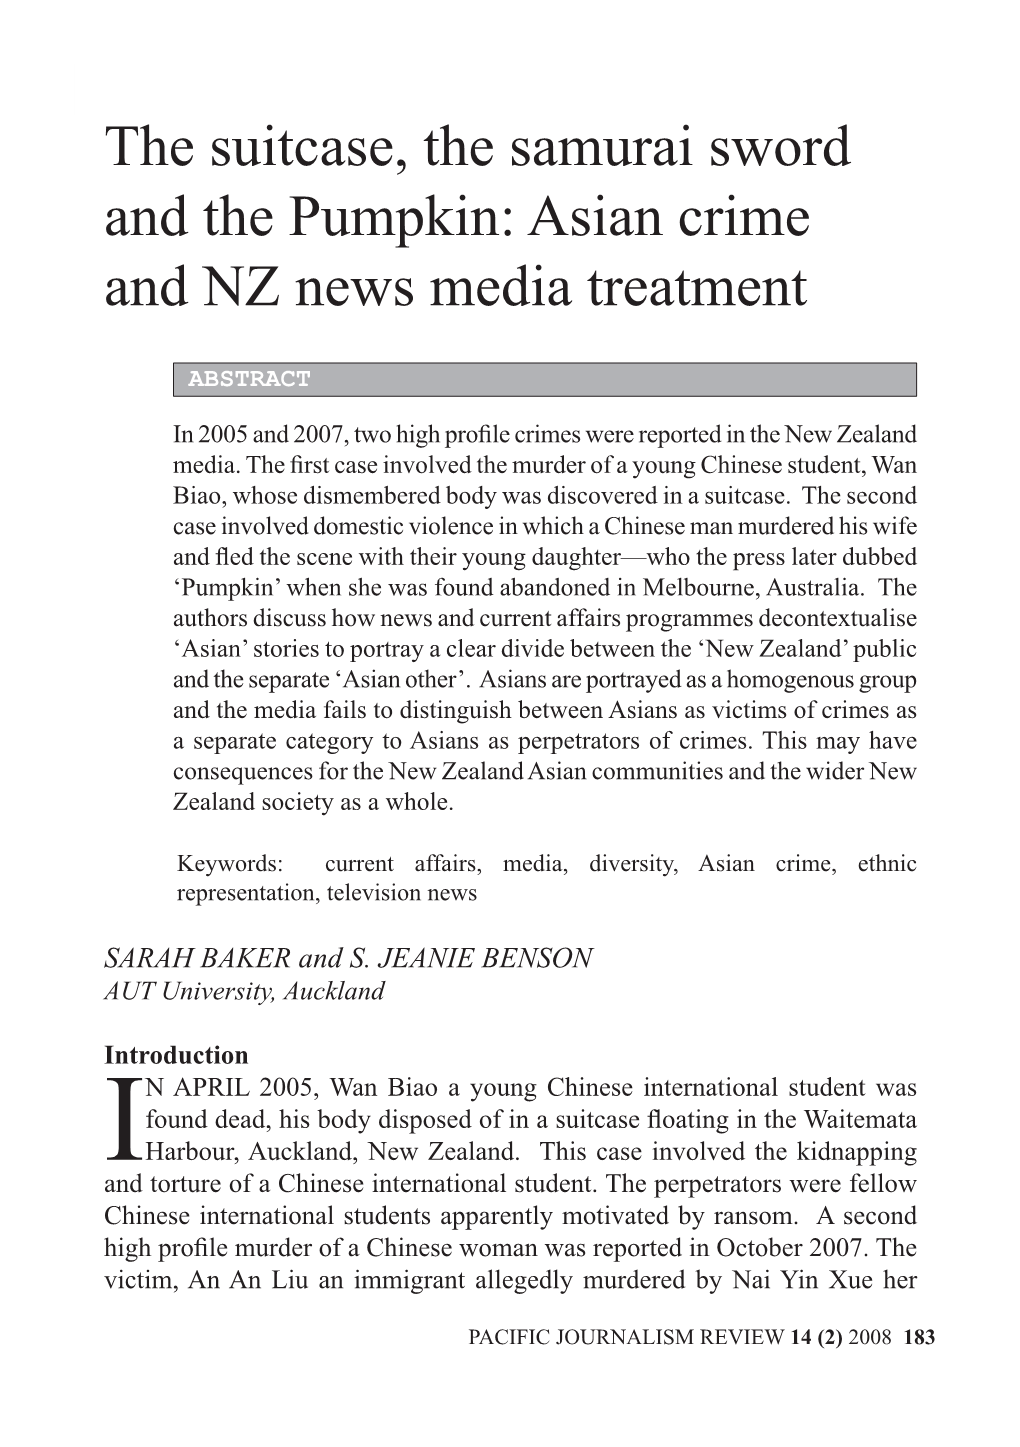 Asian Crime and NZ News Media Treatment